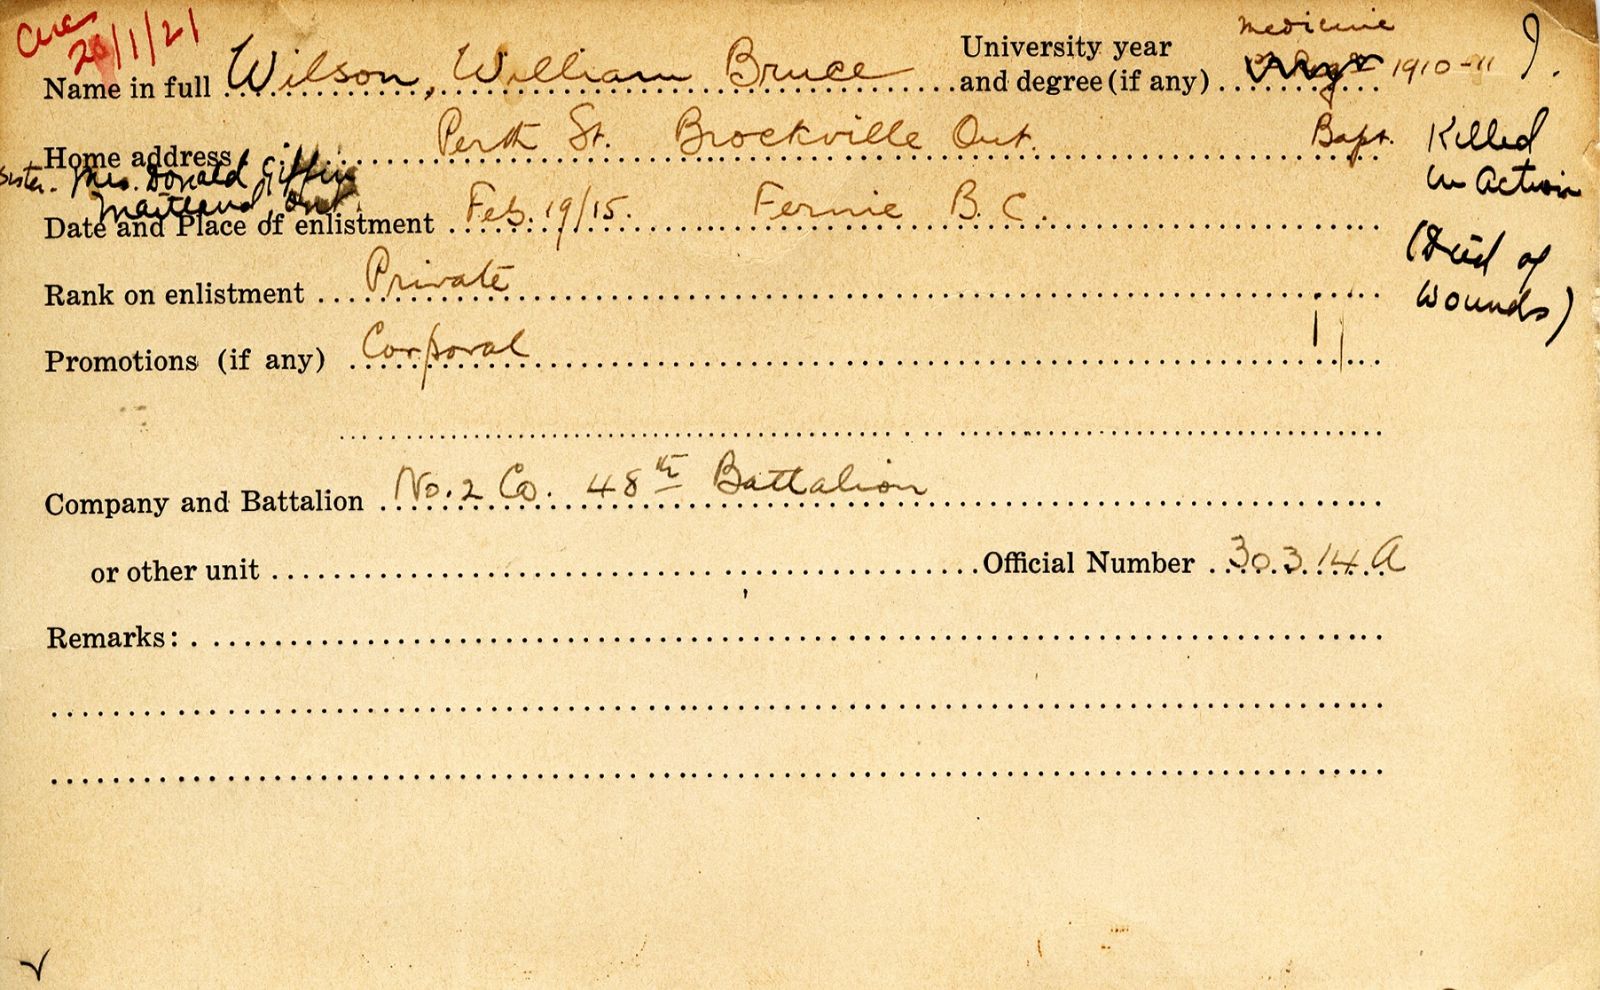 University Military Service Record of Wilson